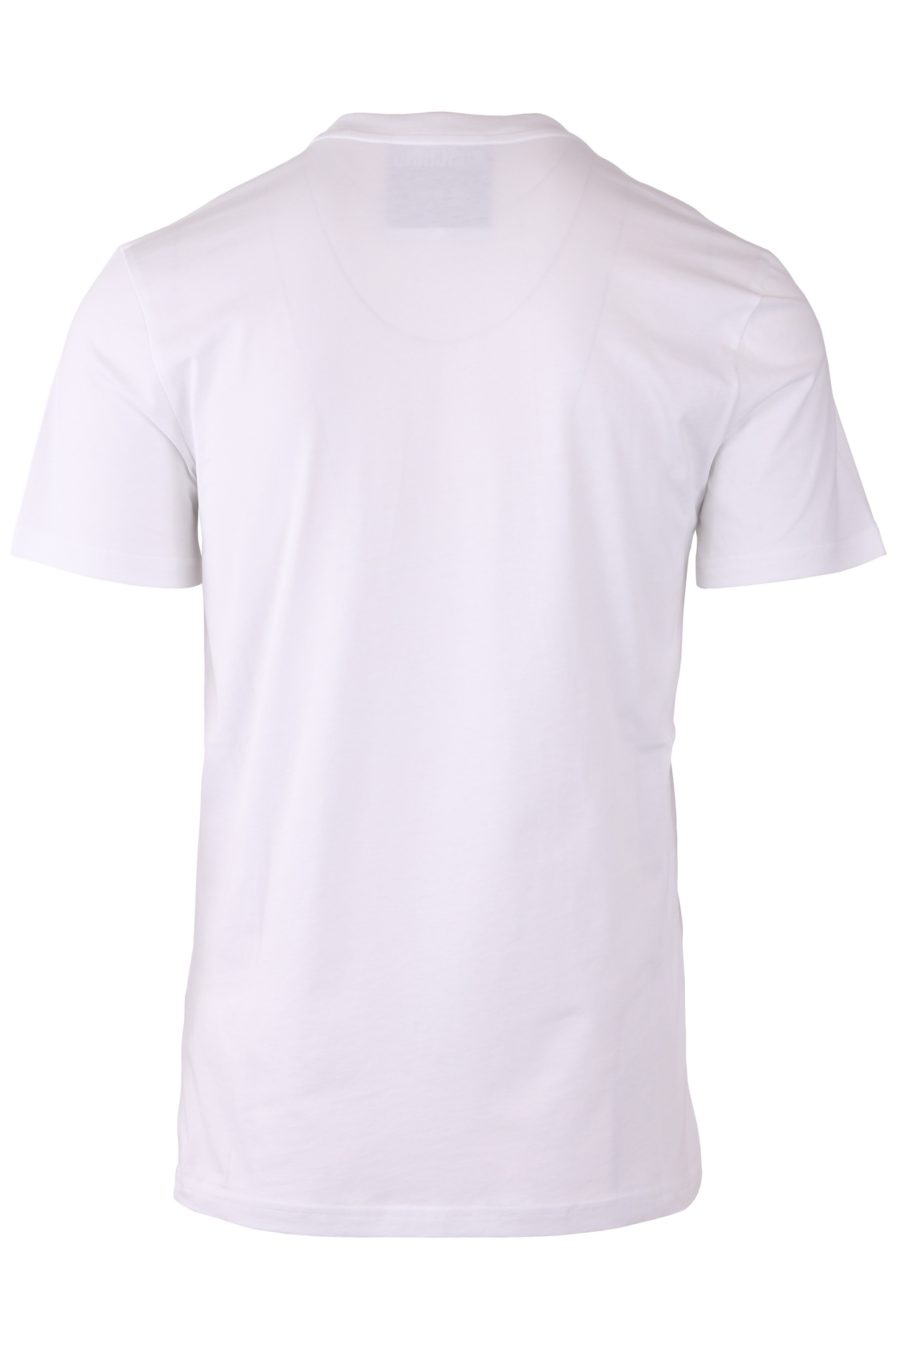 T-Shirt Moschino Couture regular weiß mit Doppellogo Frage - 1e52da730d362aa2afc5e888c684e0a6489f9136